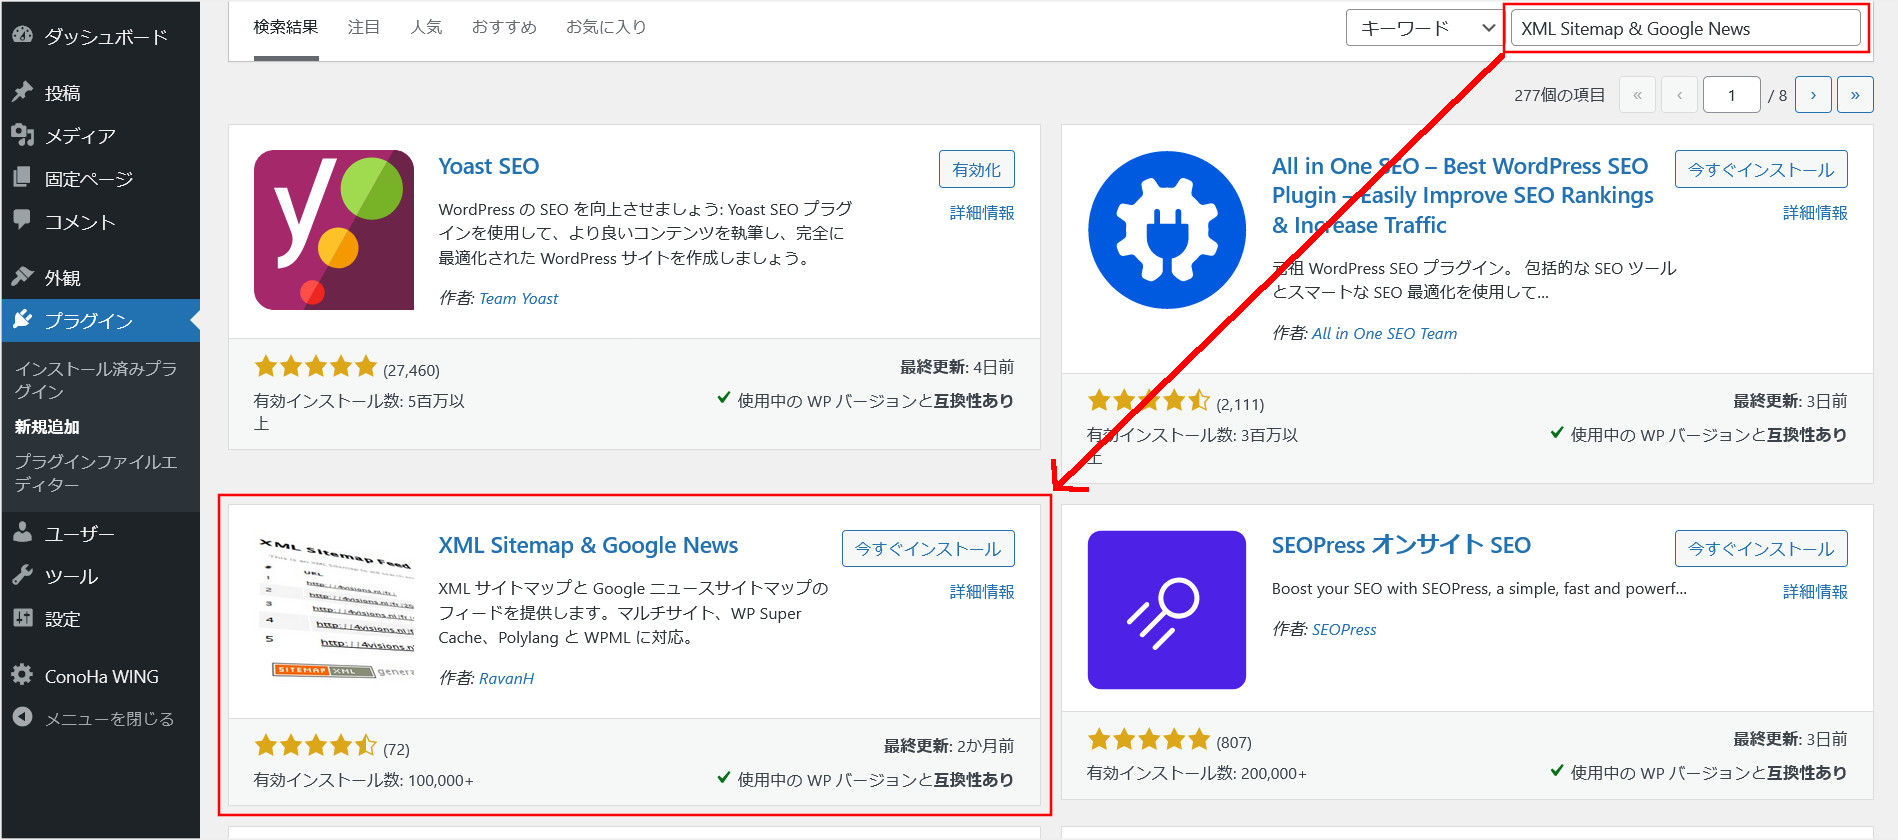 「XML Sitemap & Google News」の検索とインストール